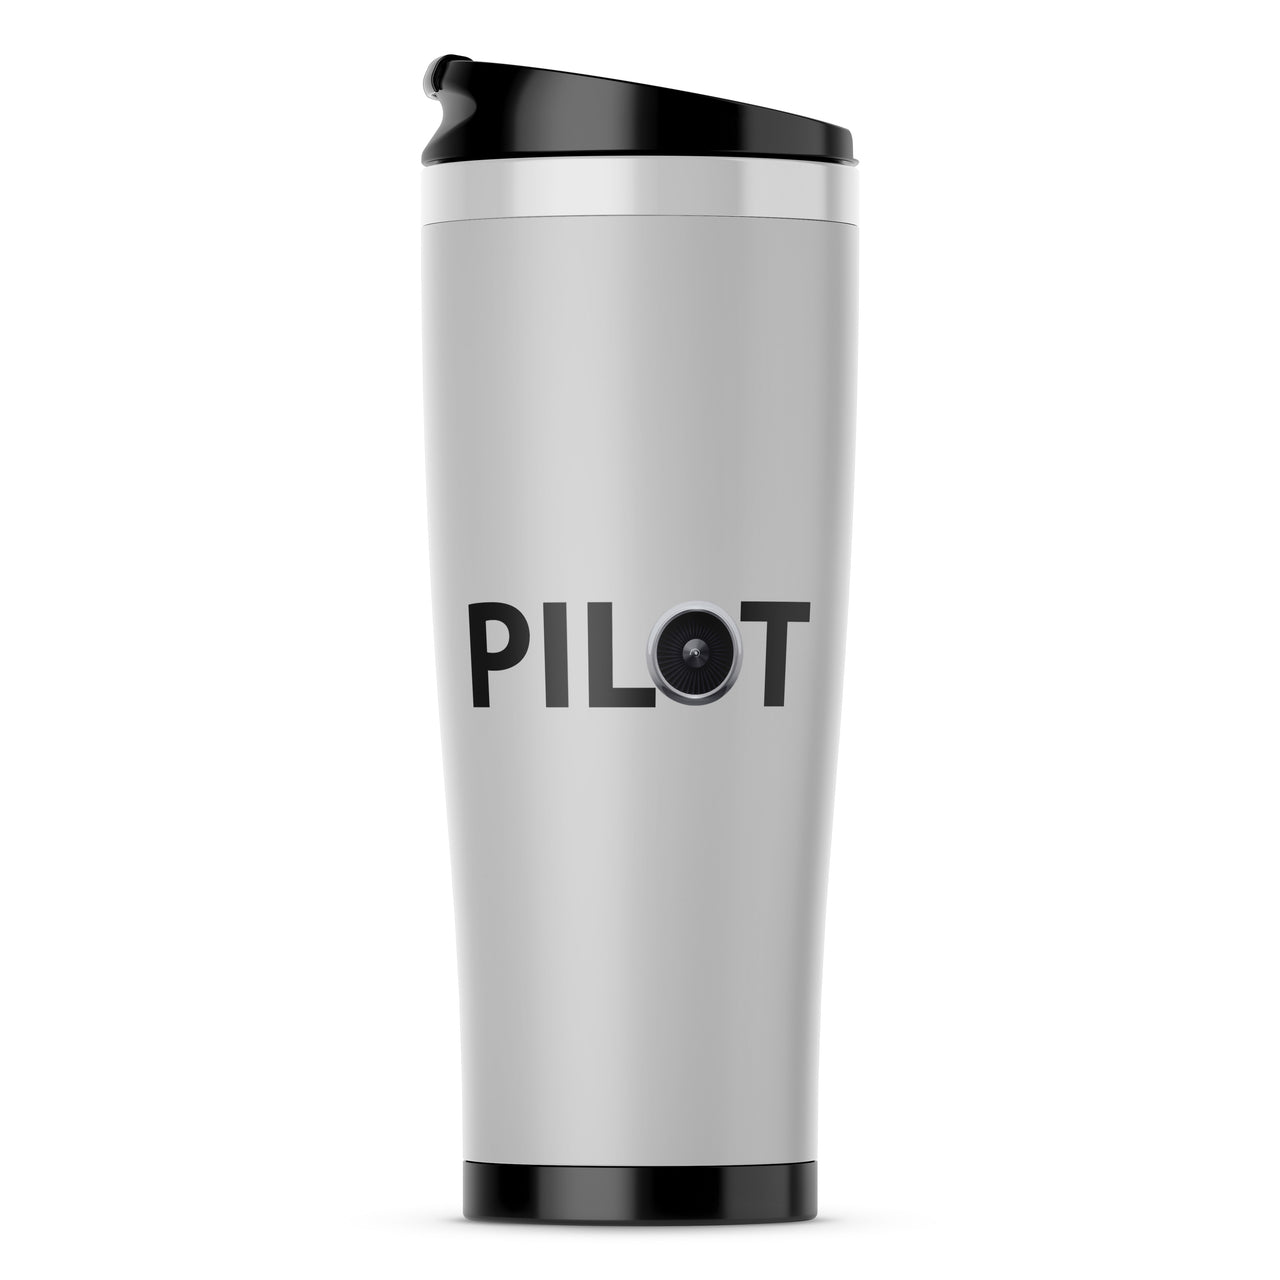 Pilot & Jet Engine Designed Travel Mugs